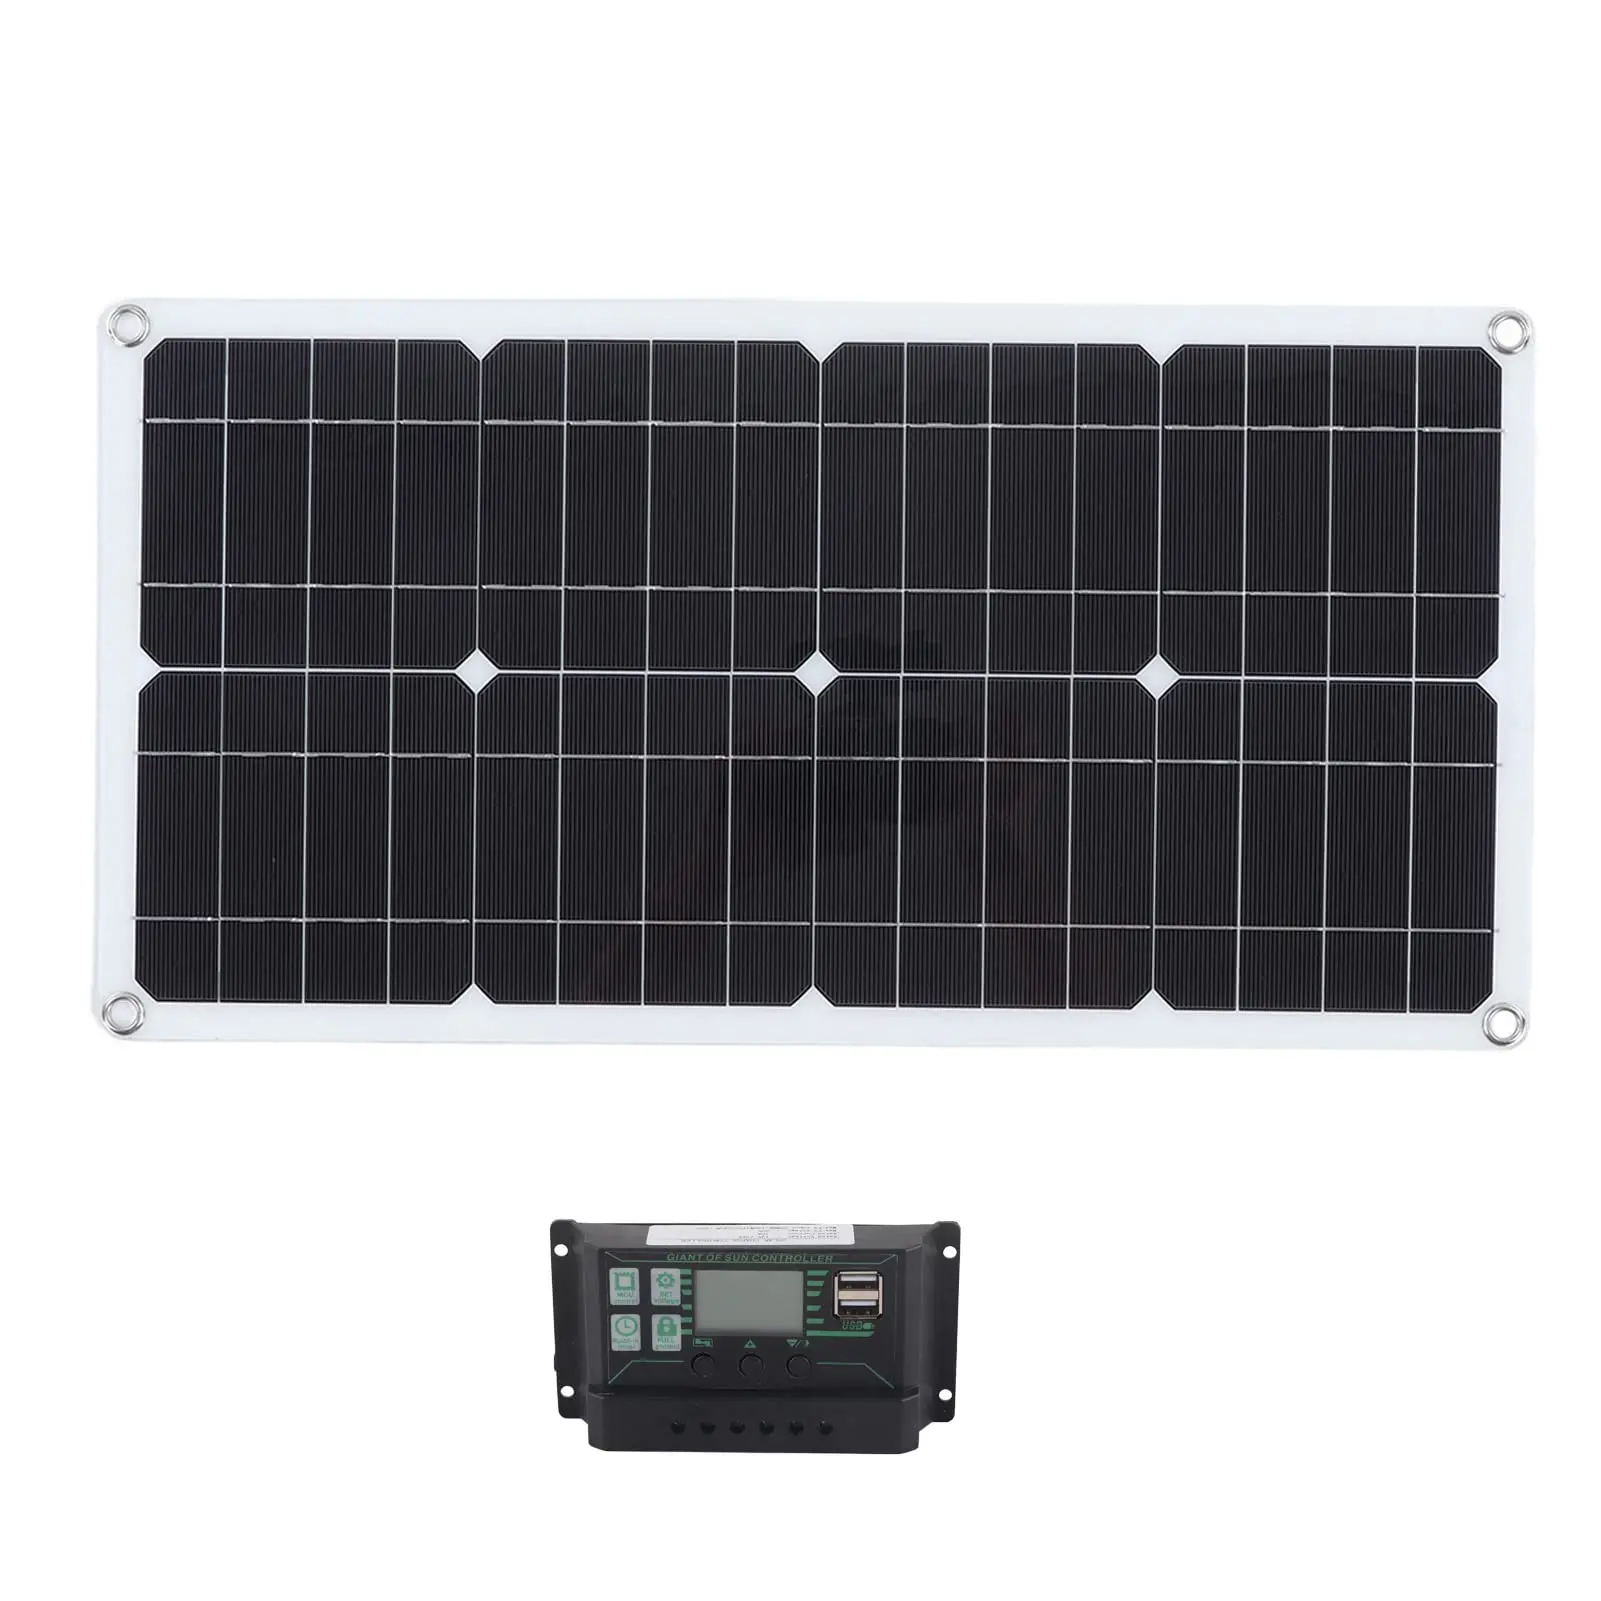 250 watt solar panel amazon - How many amps is a 250 watt solar panel